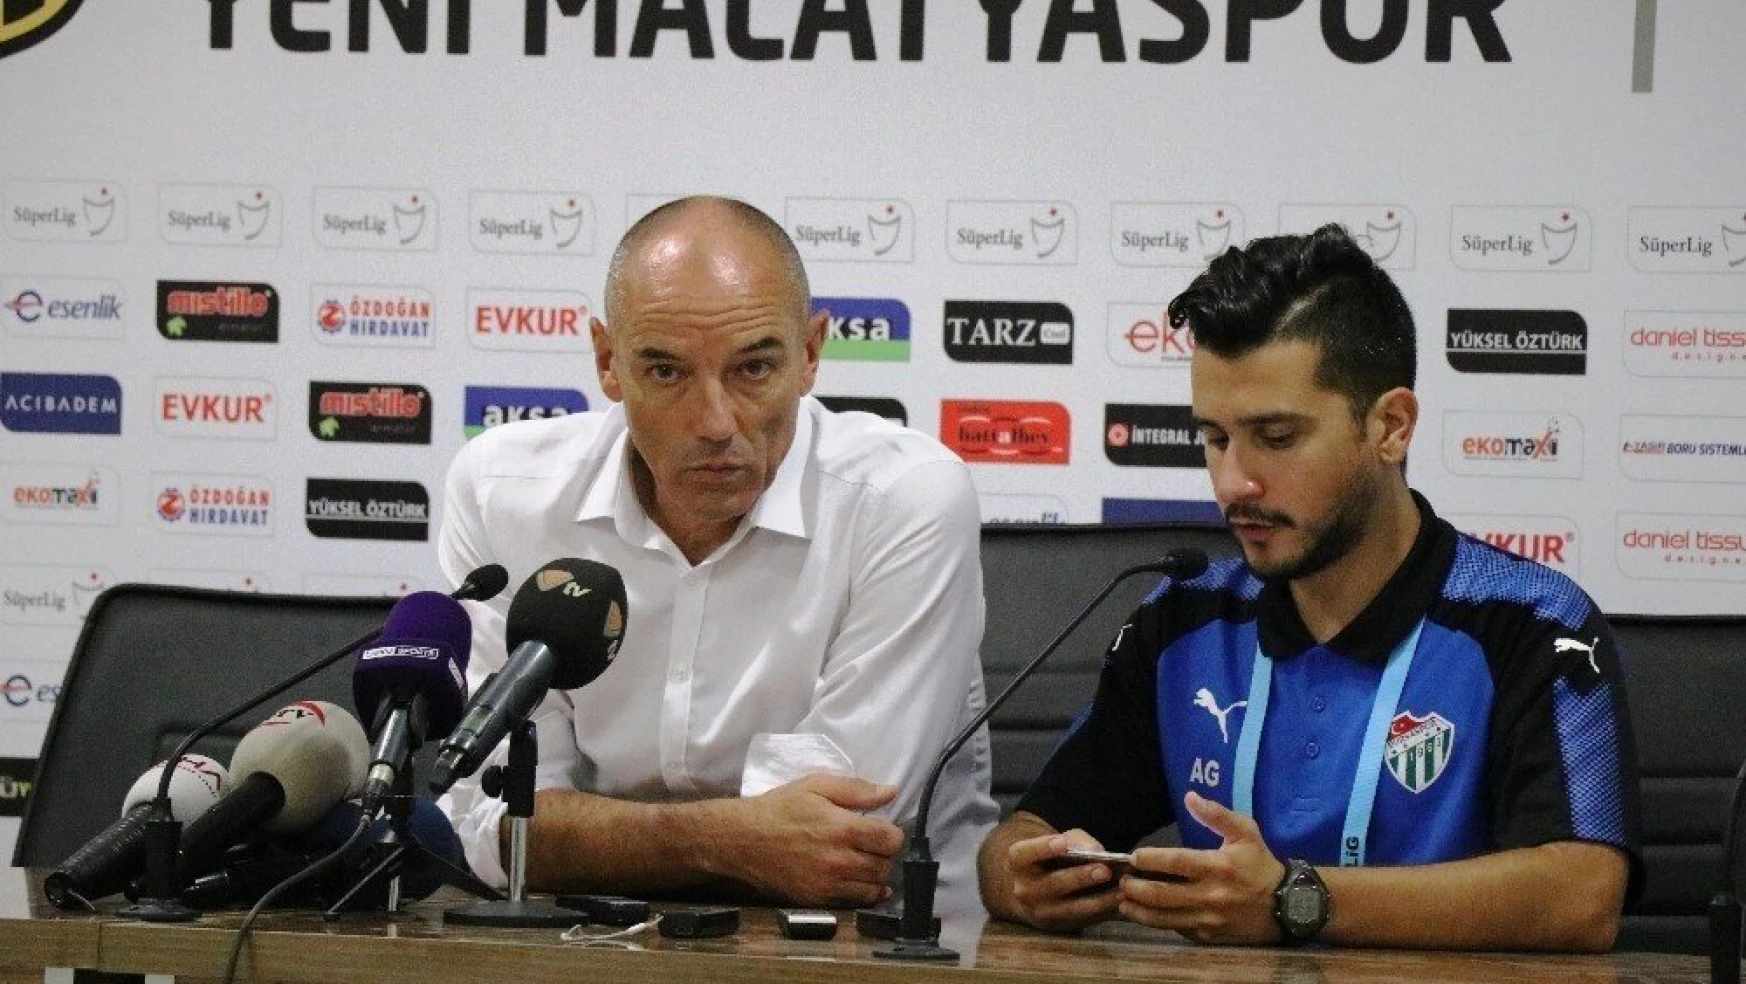 E.Y. Malatyaspor - Bursaspor maçının ardından
